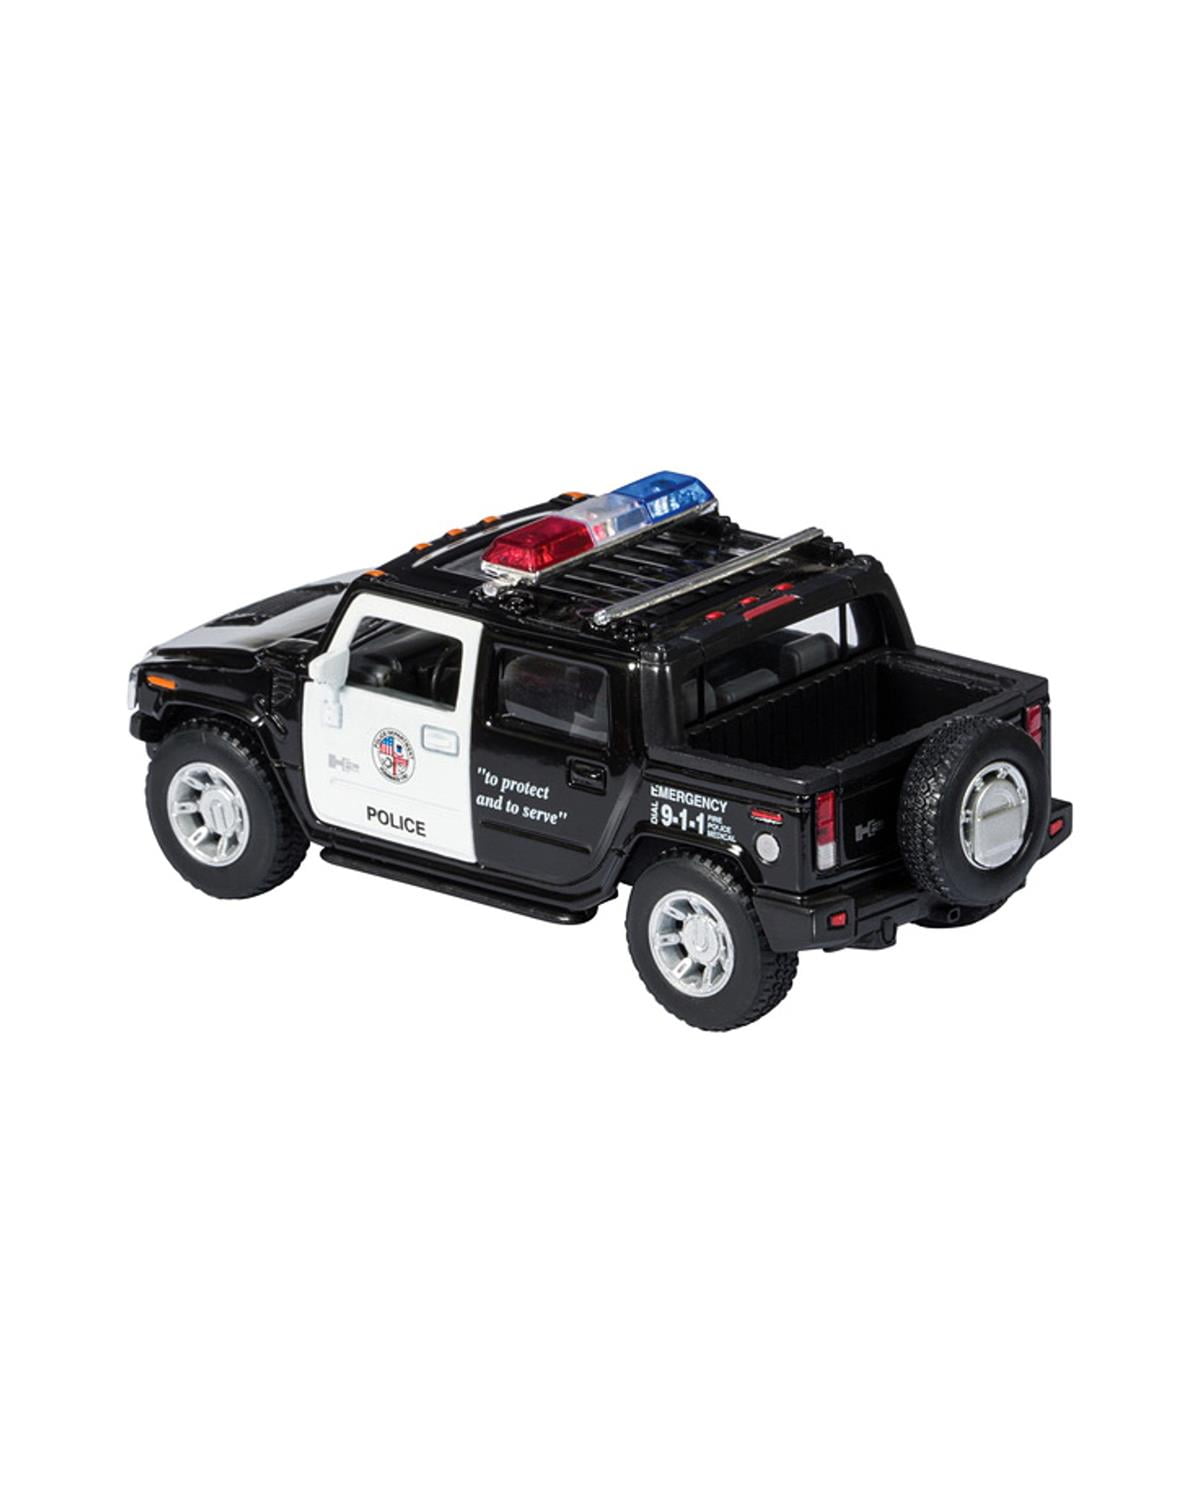 Fun Stuff Toy Cars Pickup Rescue Truck Car Diecast Model, No Box, F-150 Orange, Size: 5